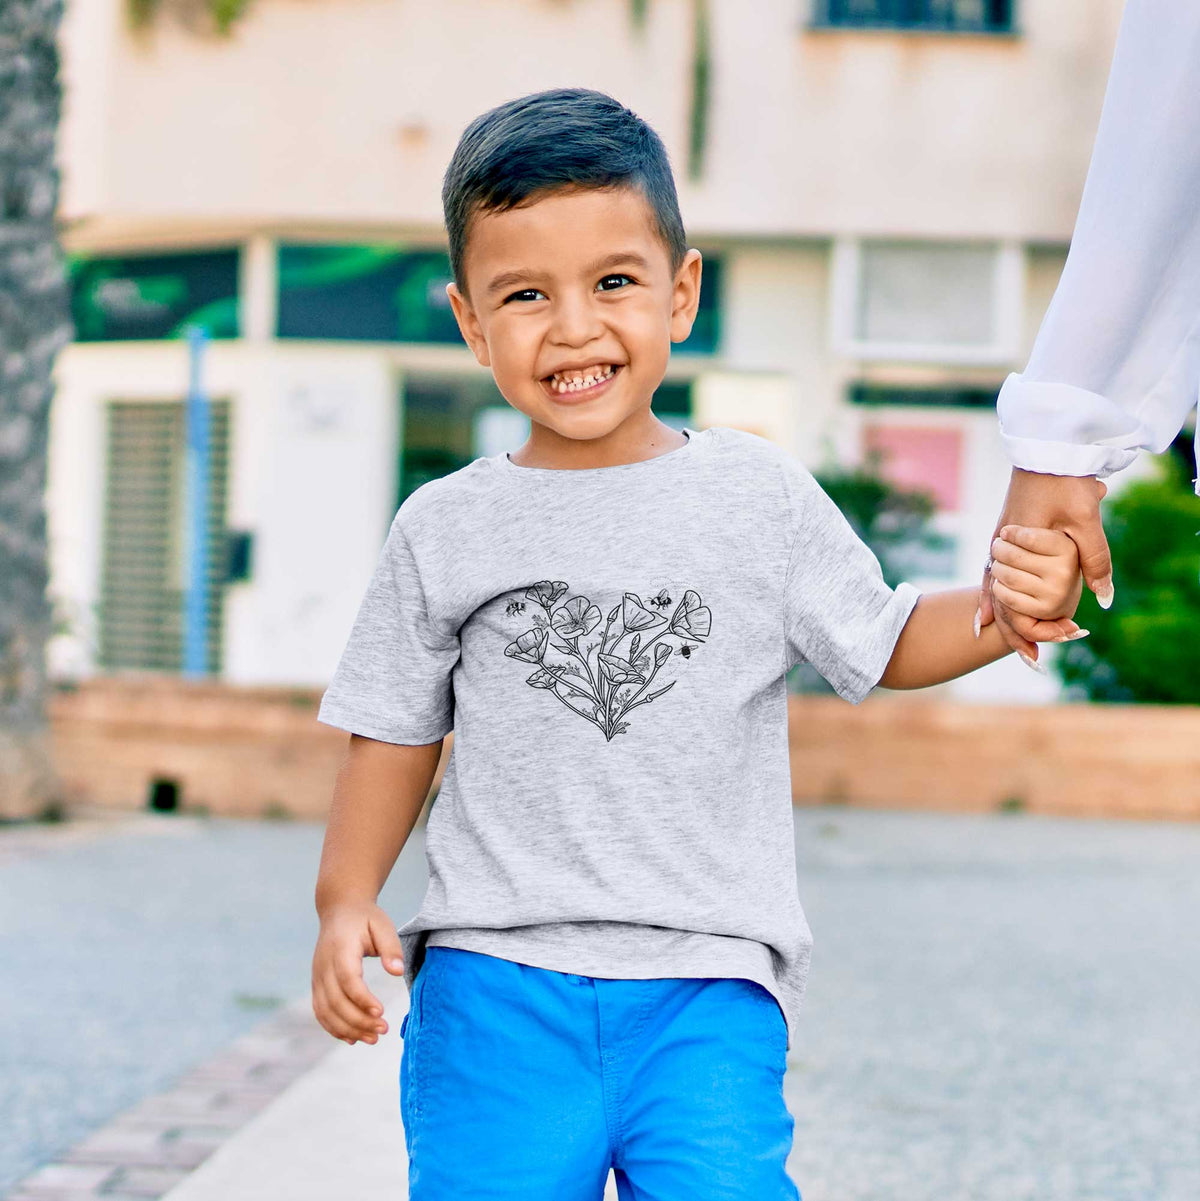 California Poppy Heart - Kids Shirt